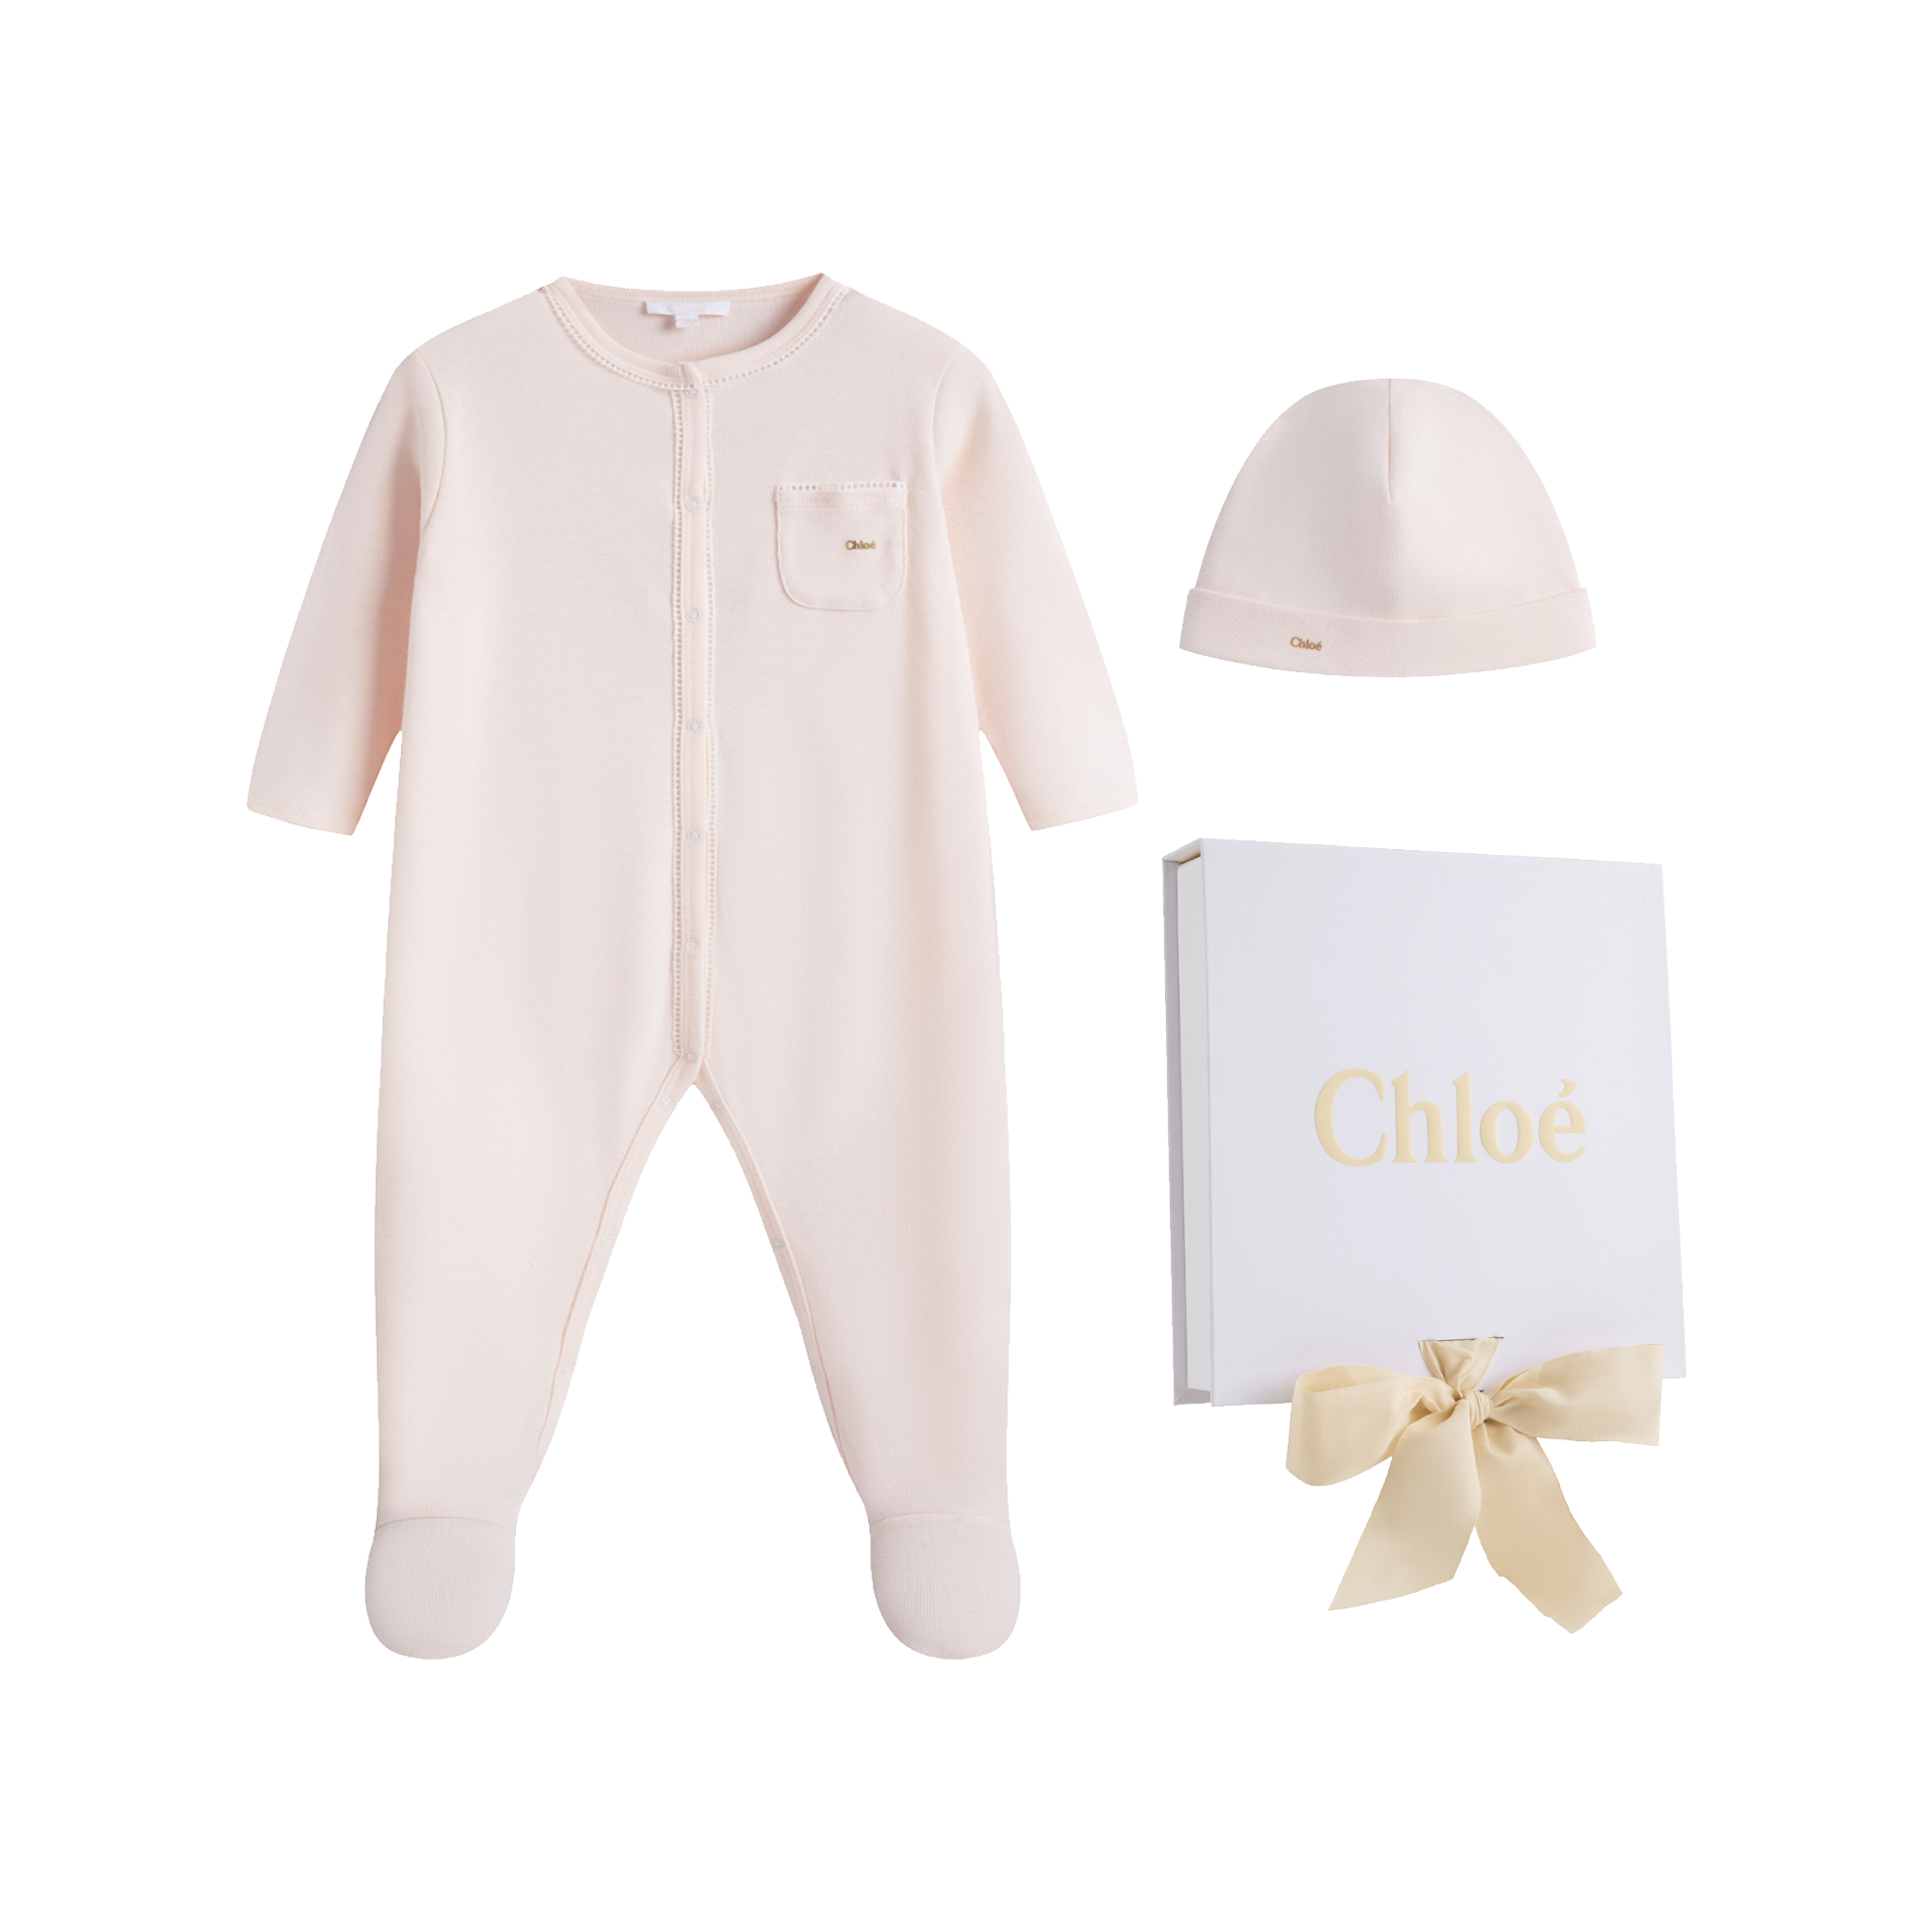 Baby Girls Light Pink Cotton Babysuit Set